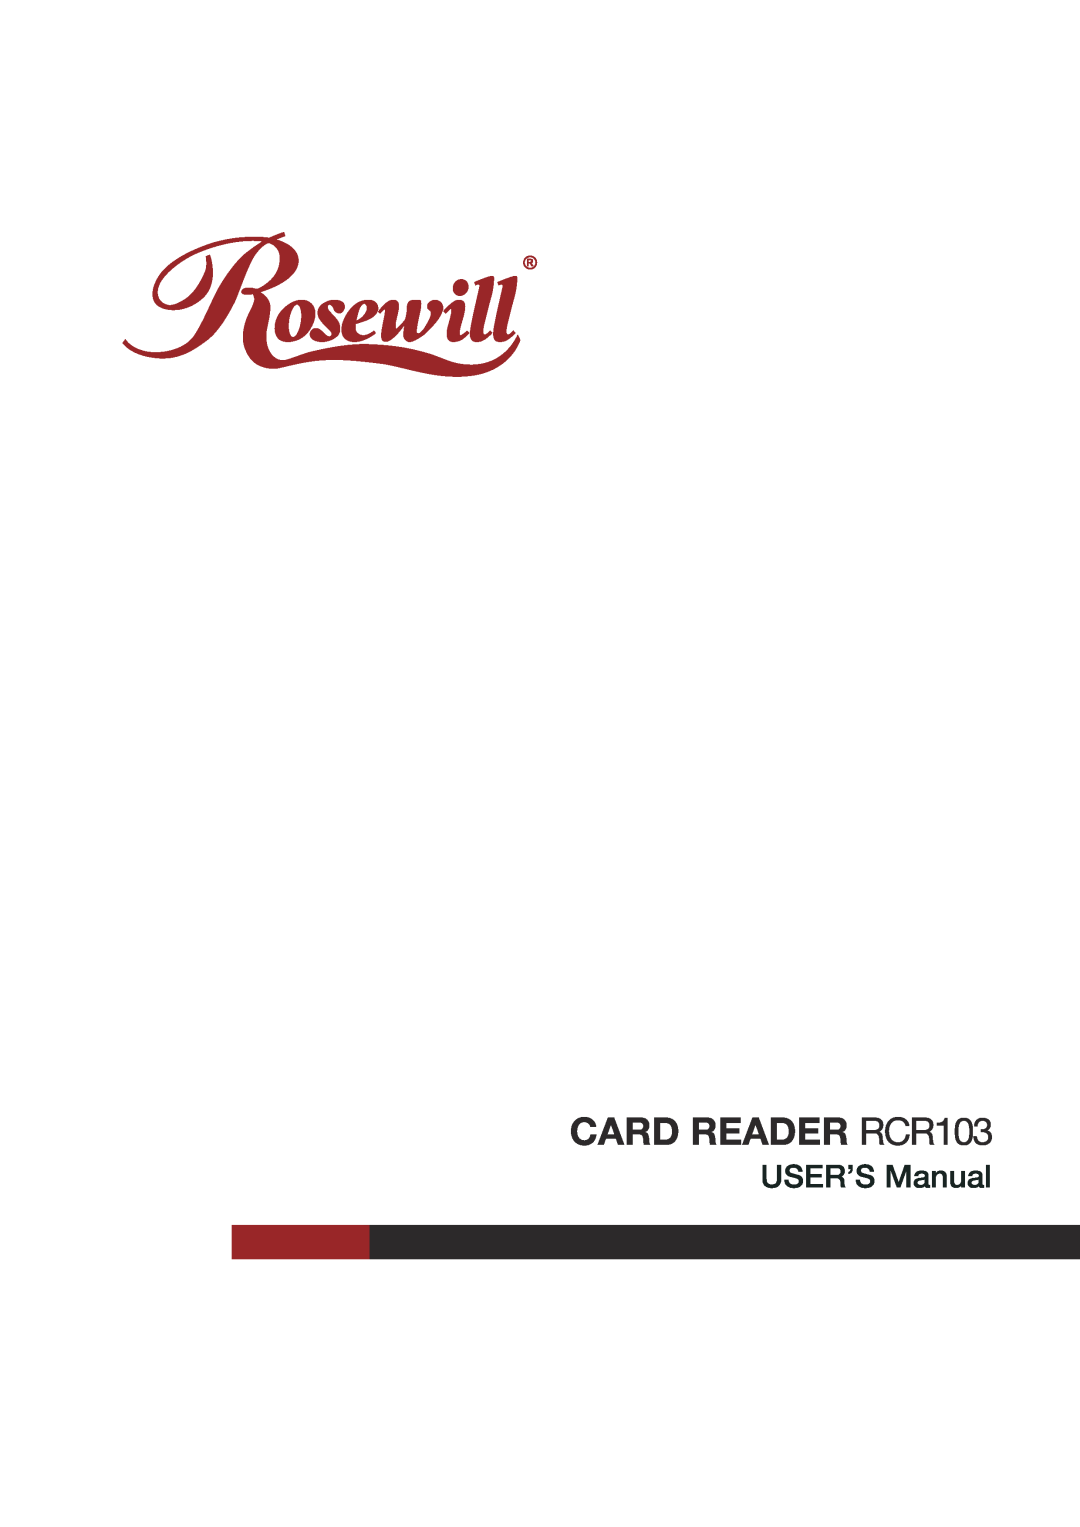 Rosewill user manual CARD READER RCR103, USER’S Manual 